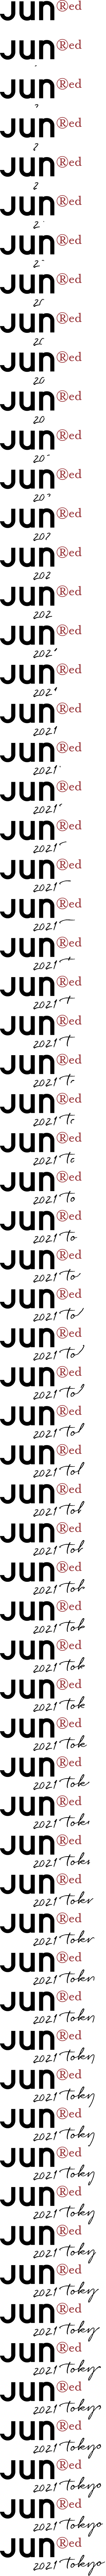 JunRed 2021Tokyo